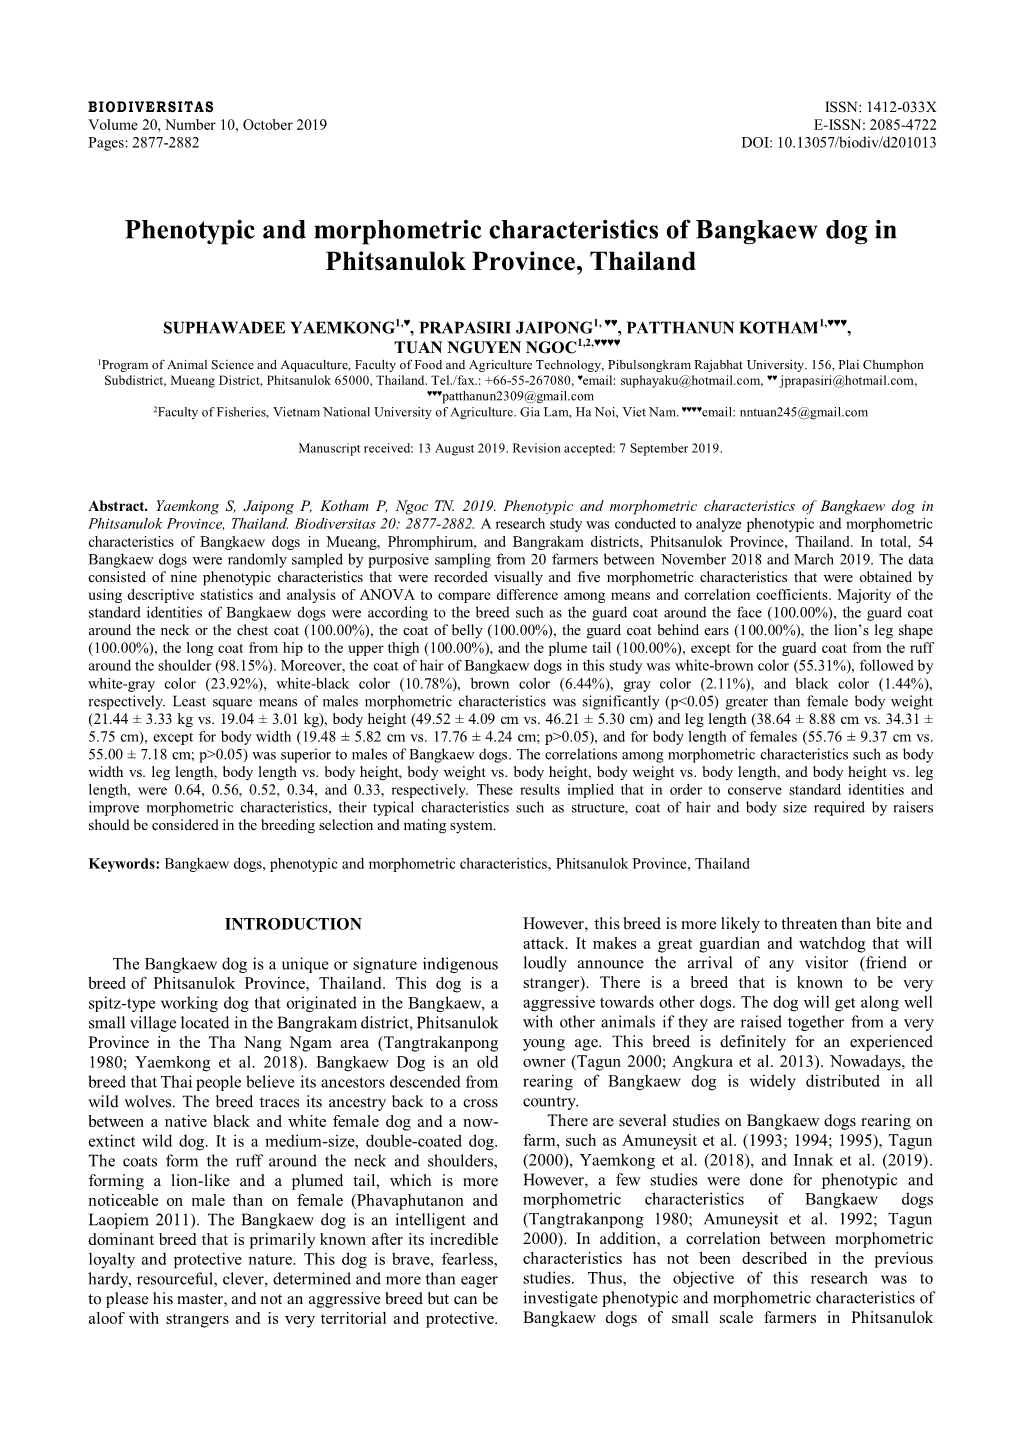 Phenotypic and Morphometric Characteristics of Bangkaew Dog in Phitsanulok Province, Thailand